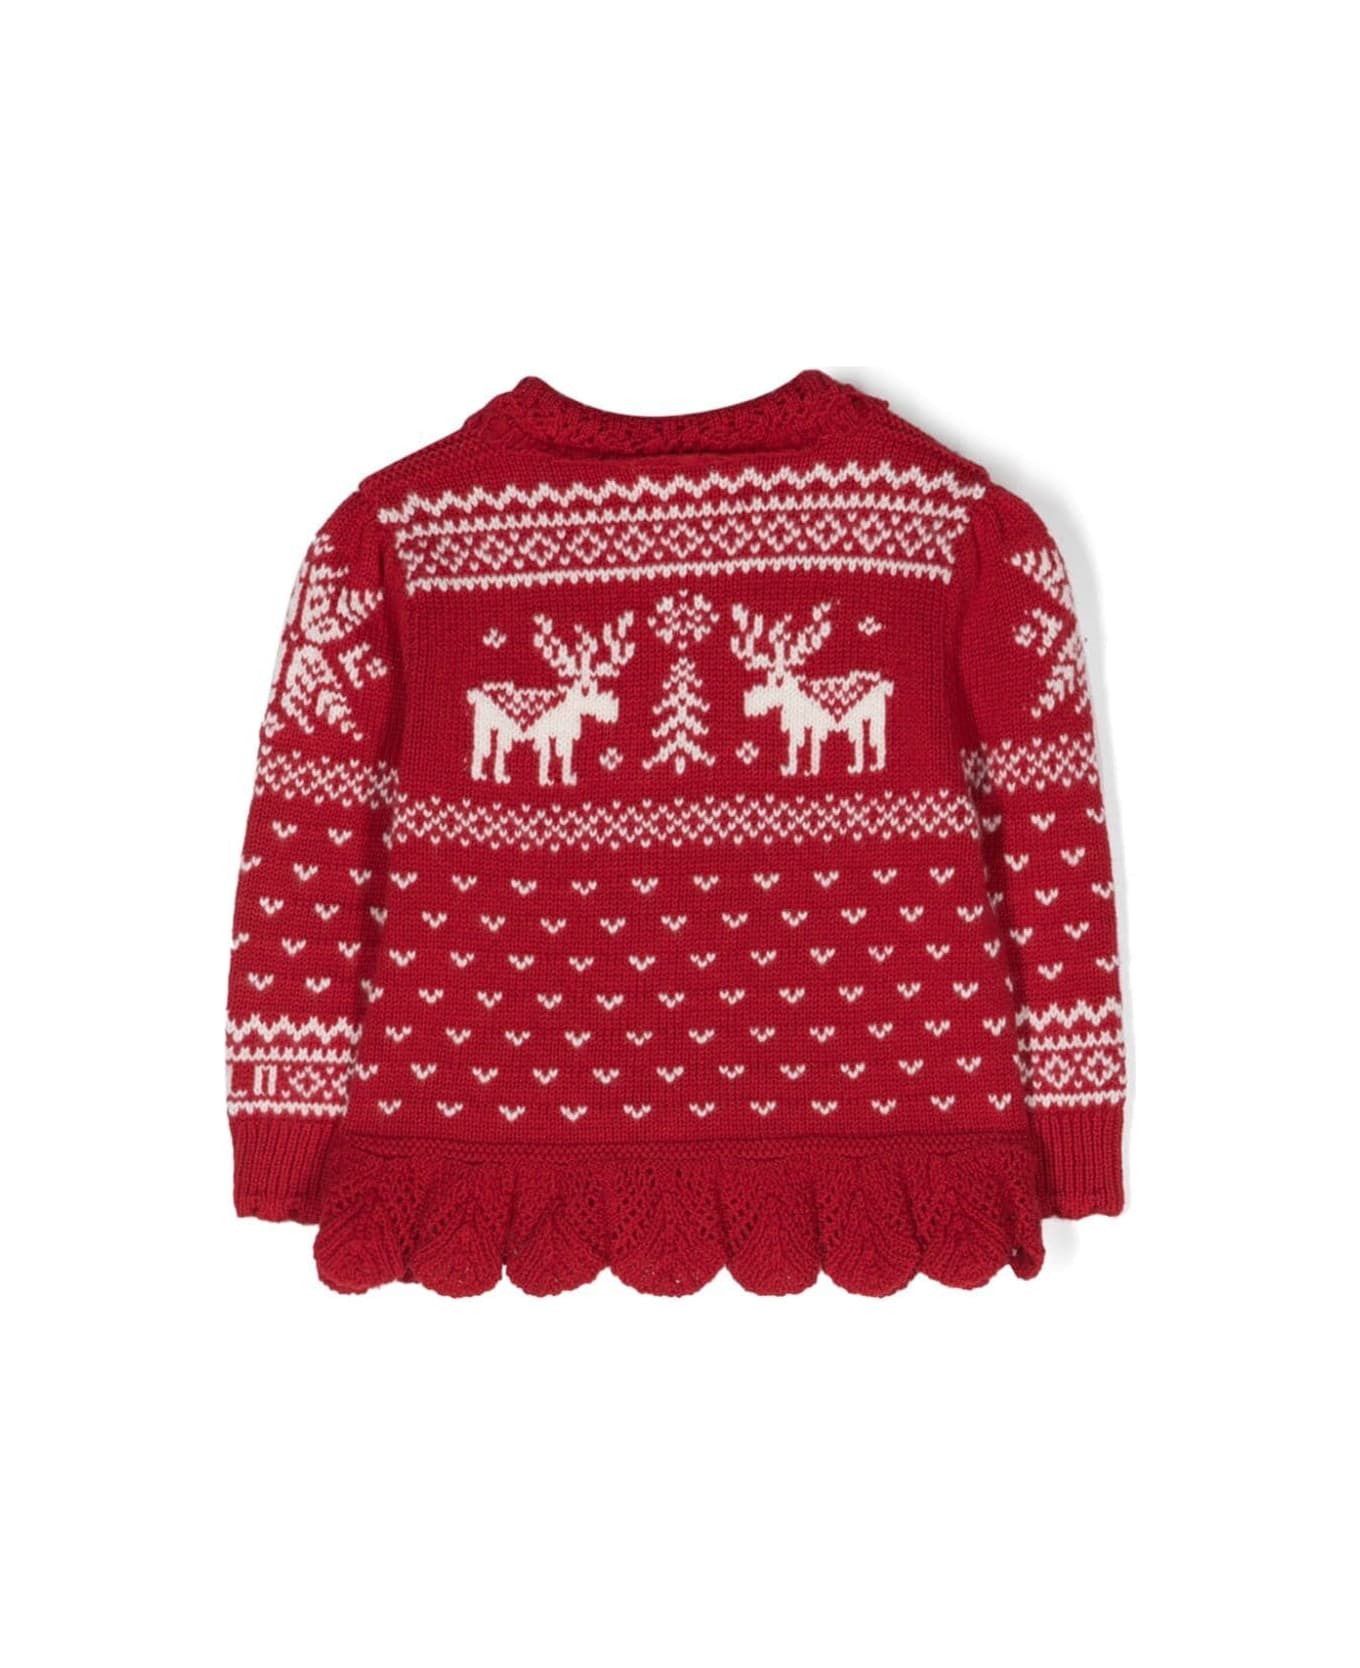 Polo Ralph Lauren Reindeer Sweater Cardigan - Park Ave Red Multi